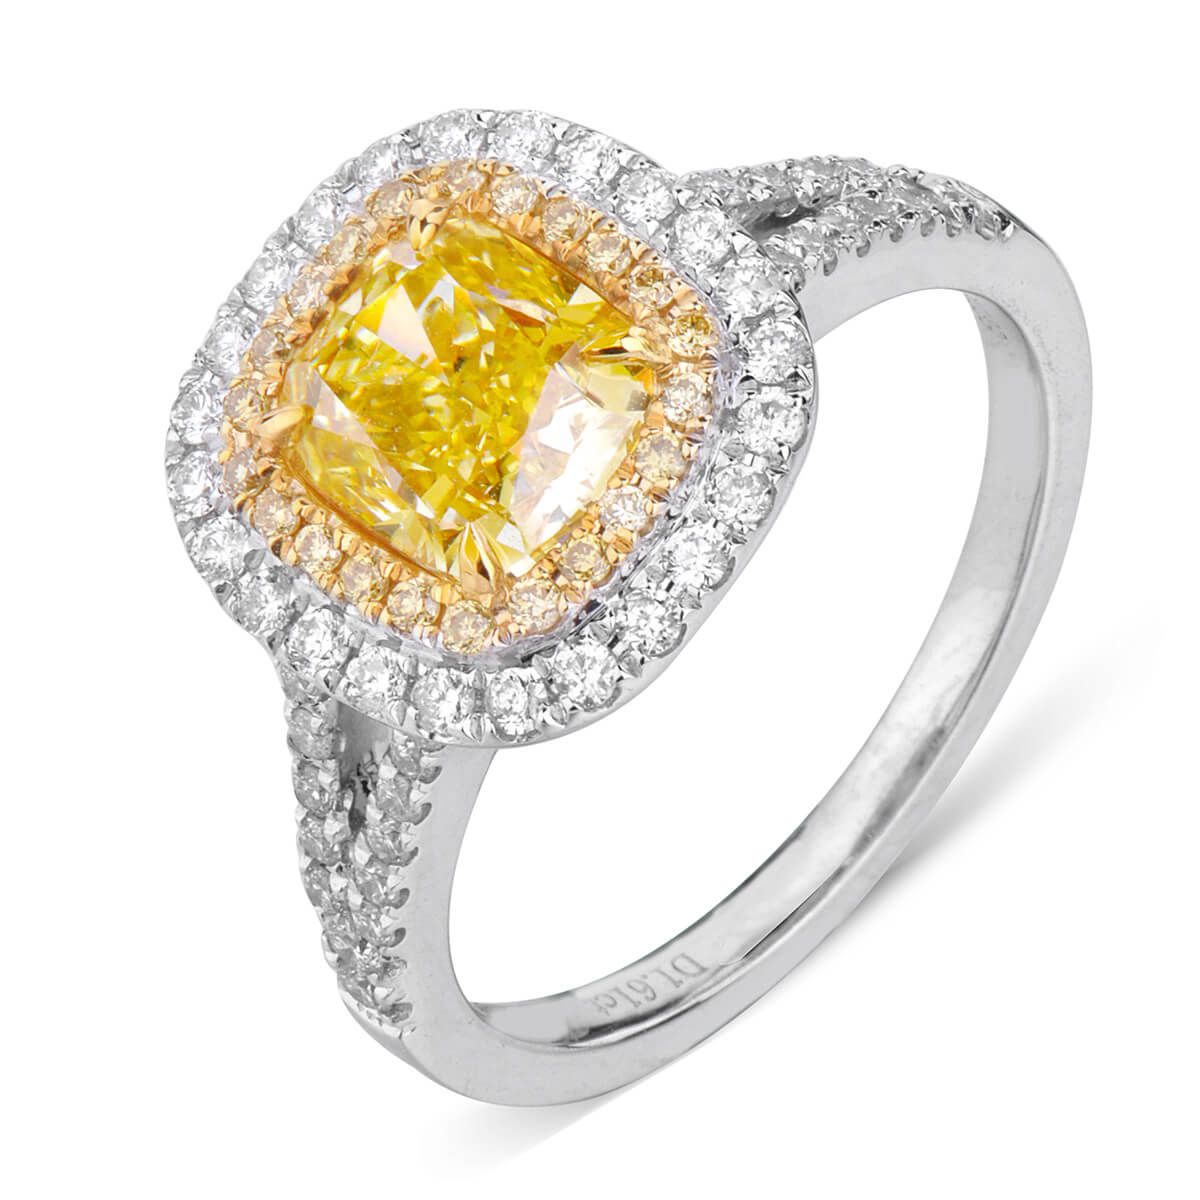 Fancy Intense Yellow Diamond Ring, 0.46 Carat, Cushion shape